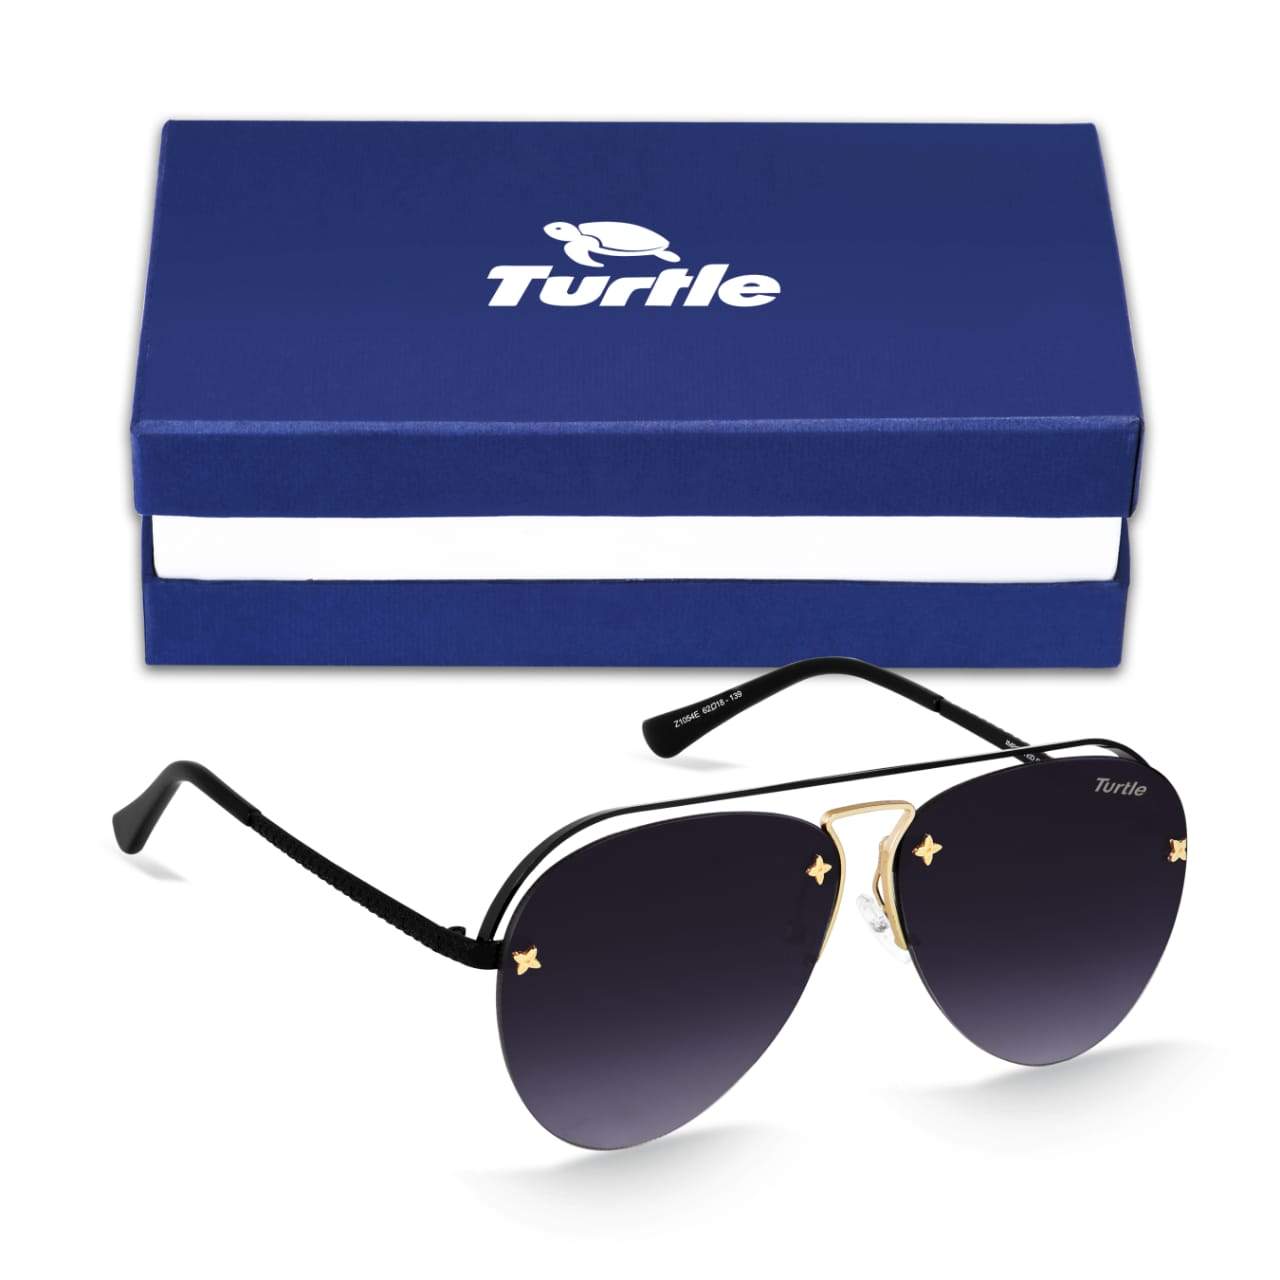 Stylish Half Rimless Aviator Pattern Premium Quality Black Gradient Sunglasses For Men And Women-Unique and Classy